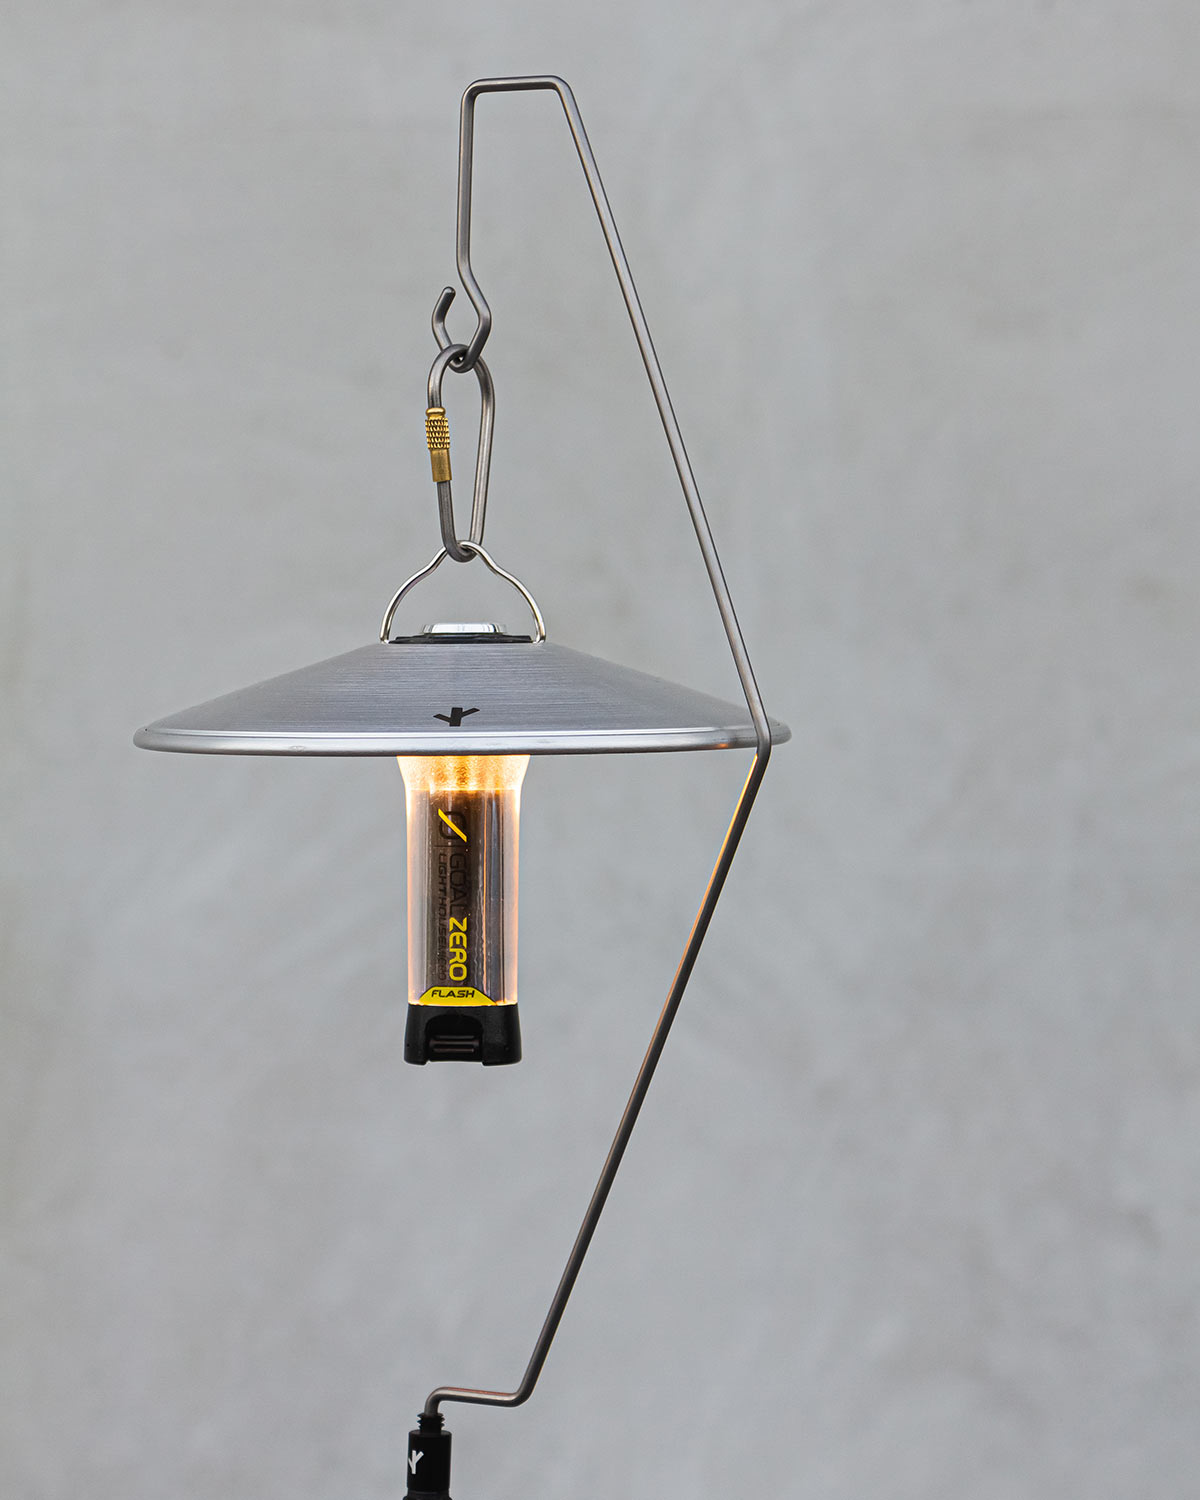 SHU WORKSUL lantern stand & lamp shade – COVERCHORD